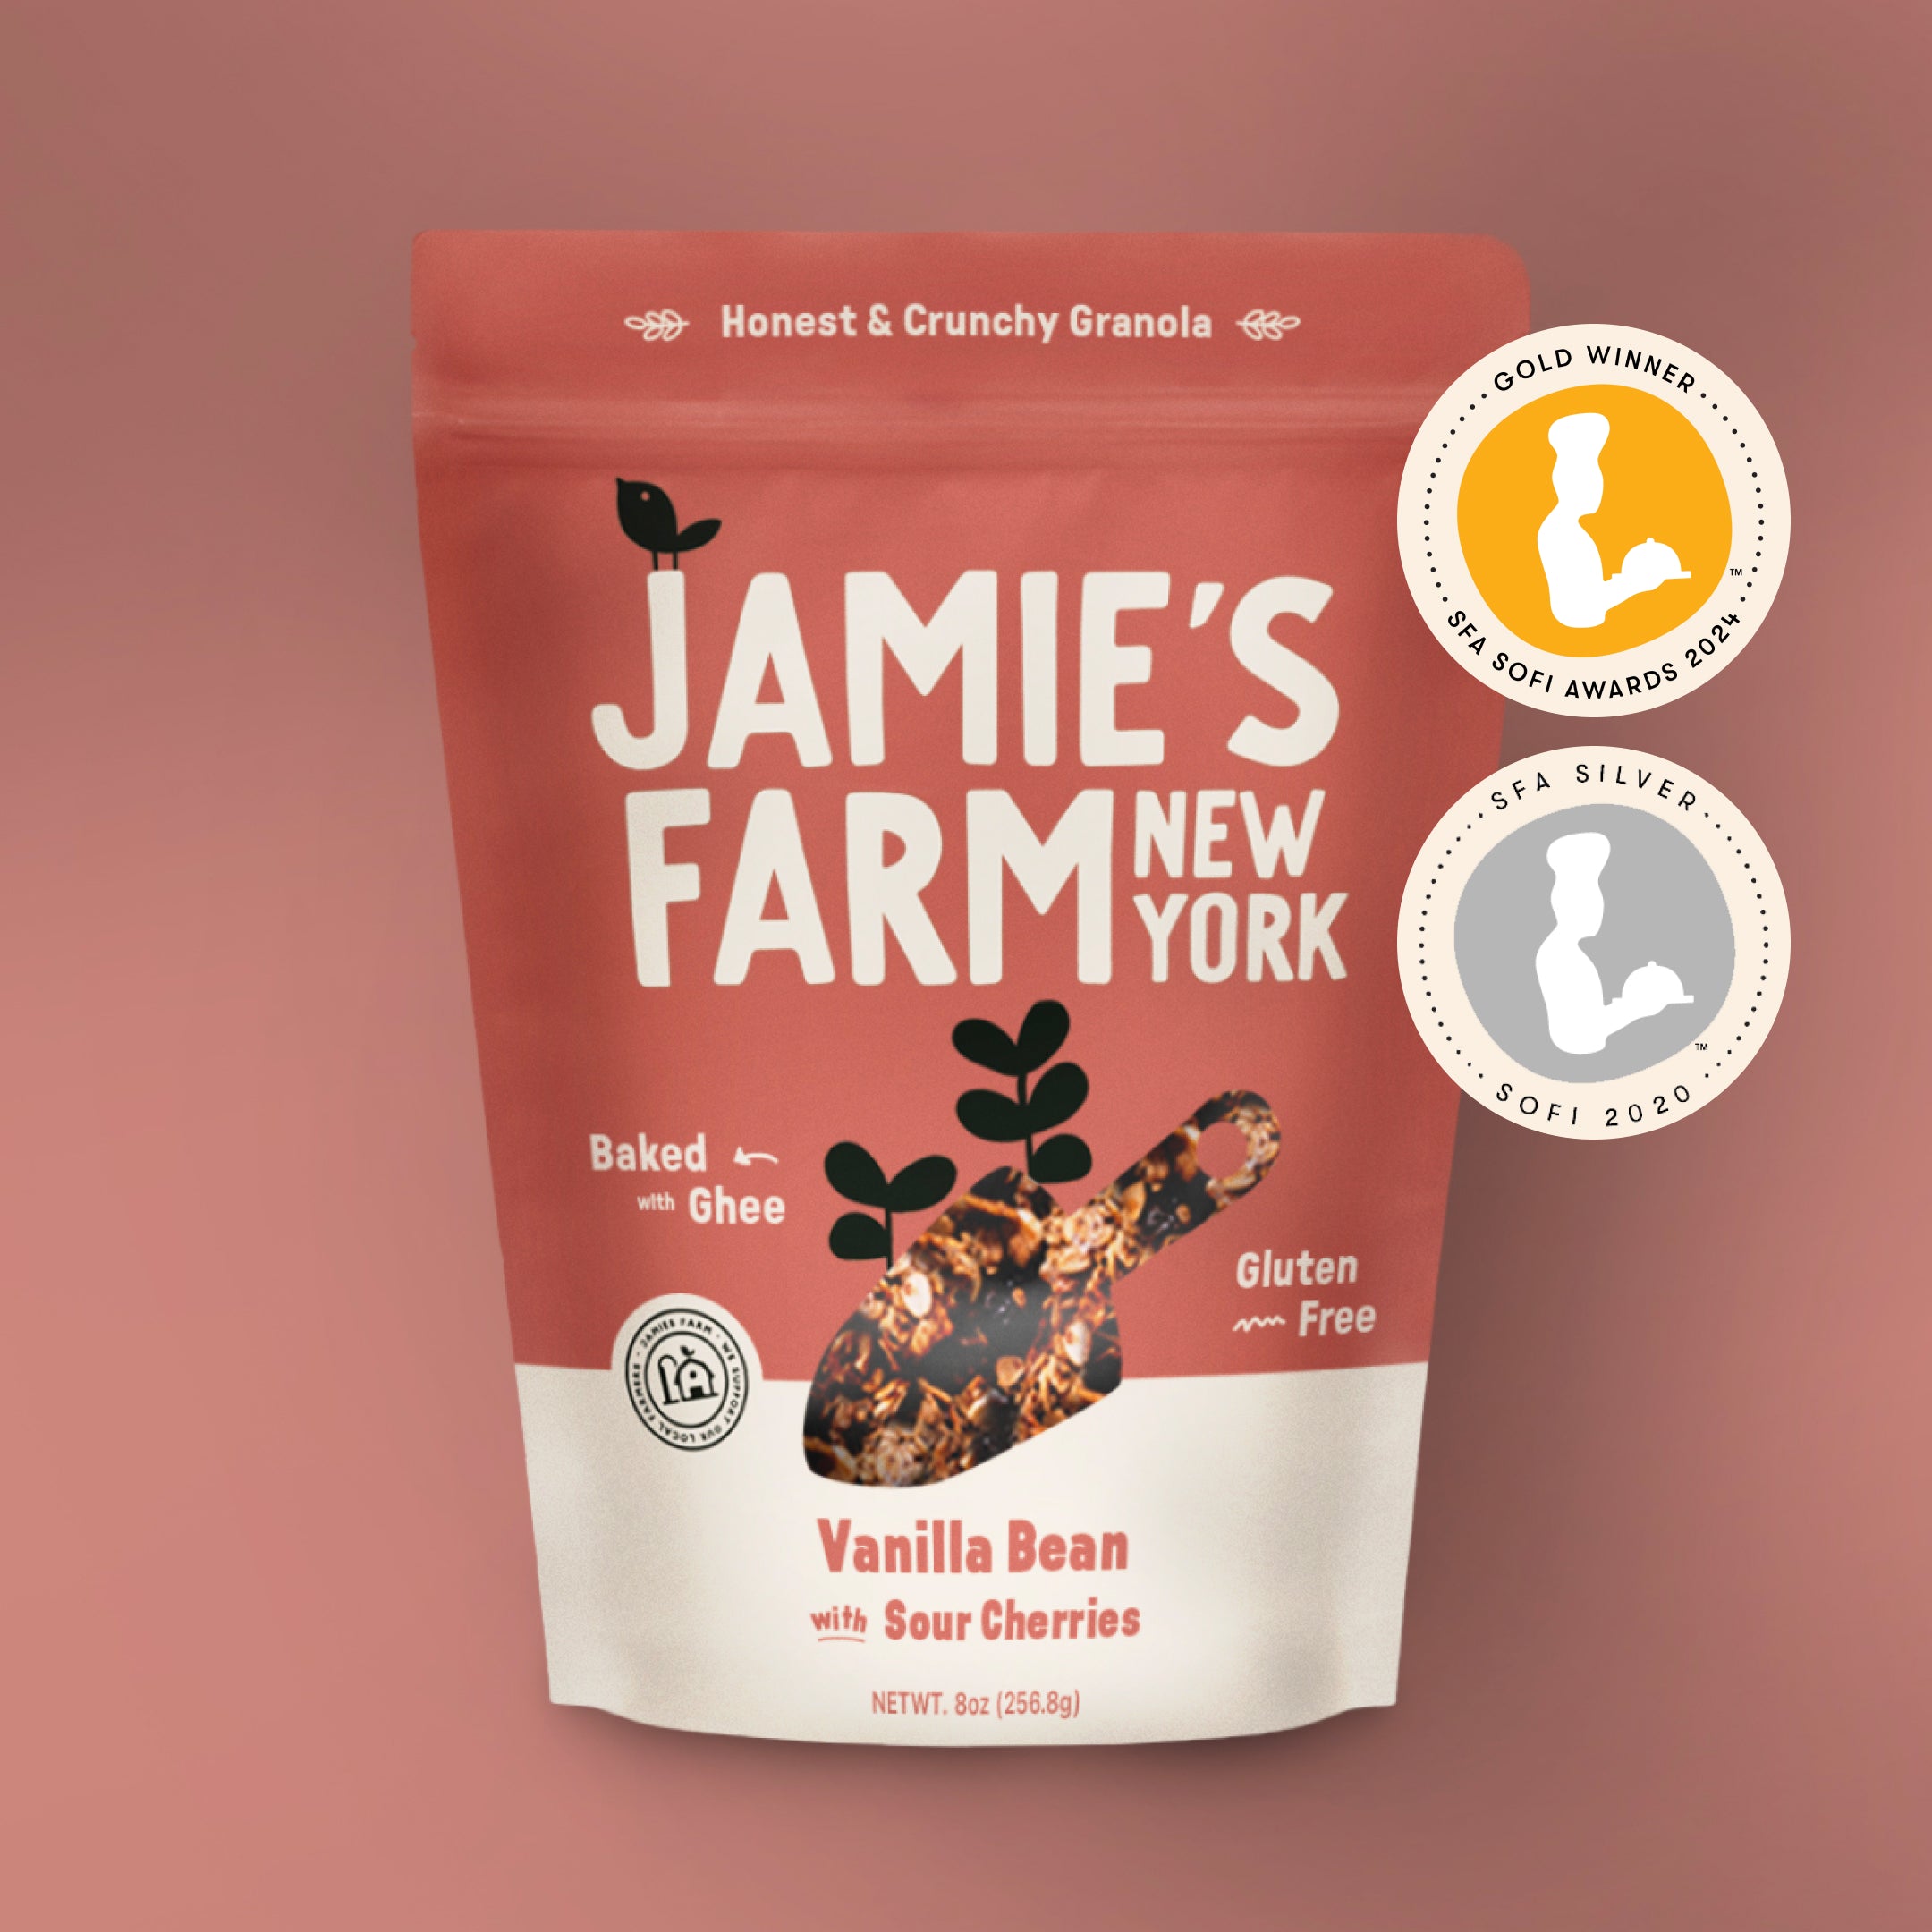 Jamie’s Farm Wins sofi™ Gold Award in Cereals/Granolas